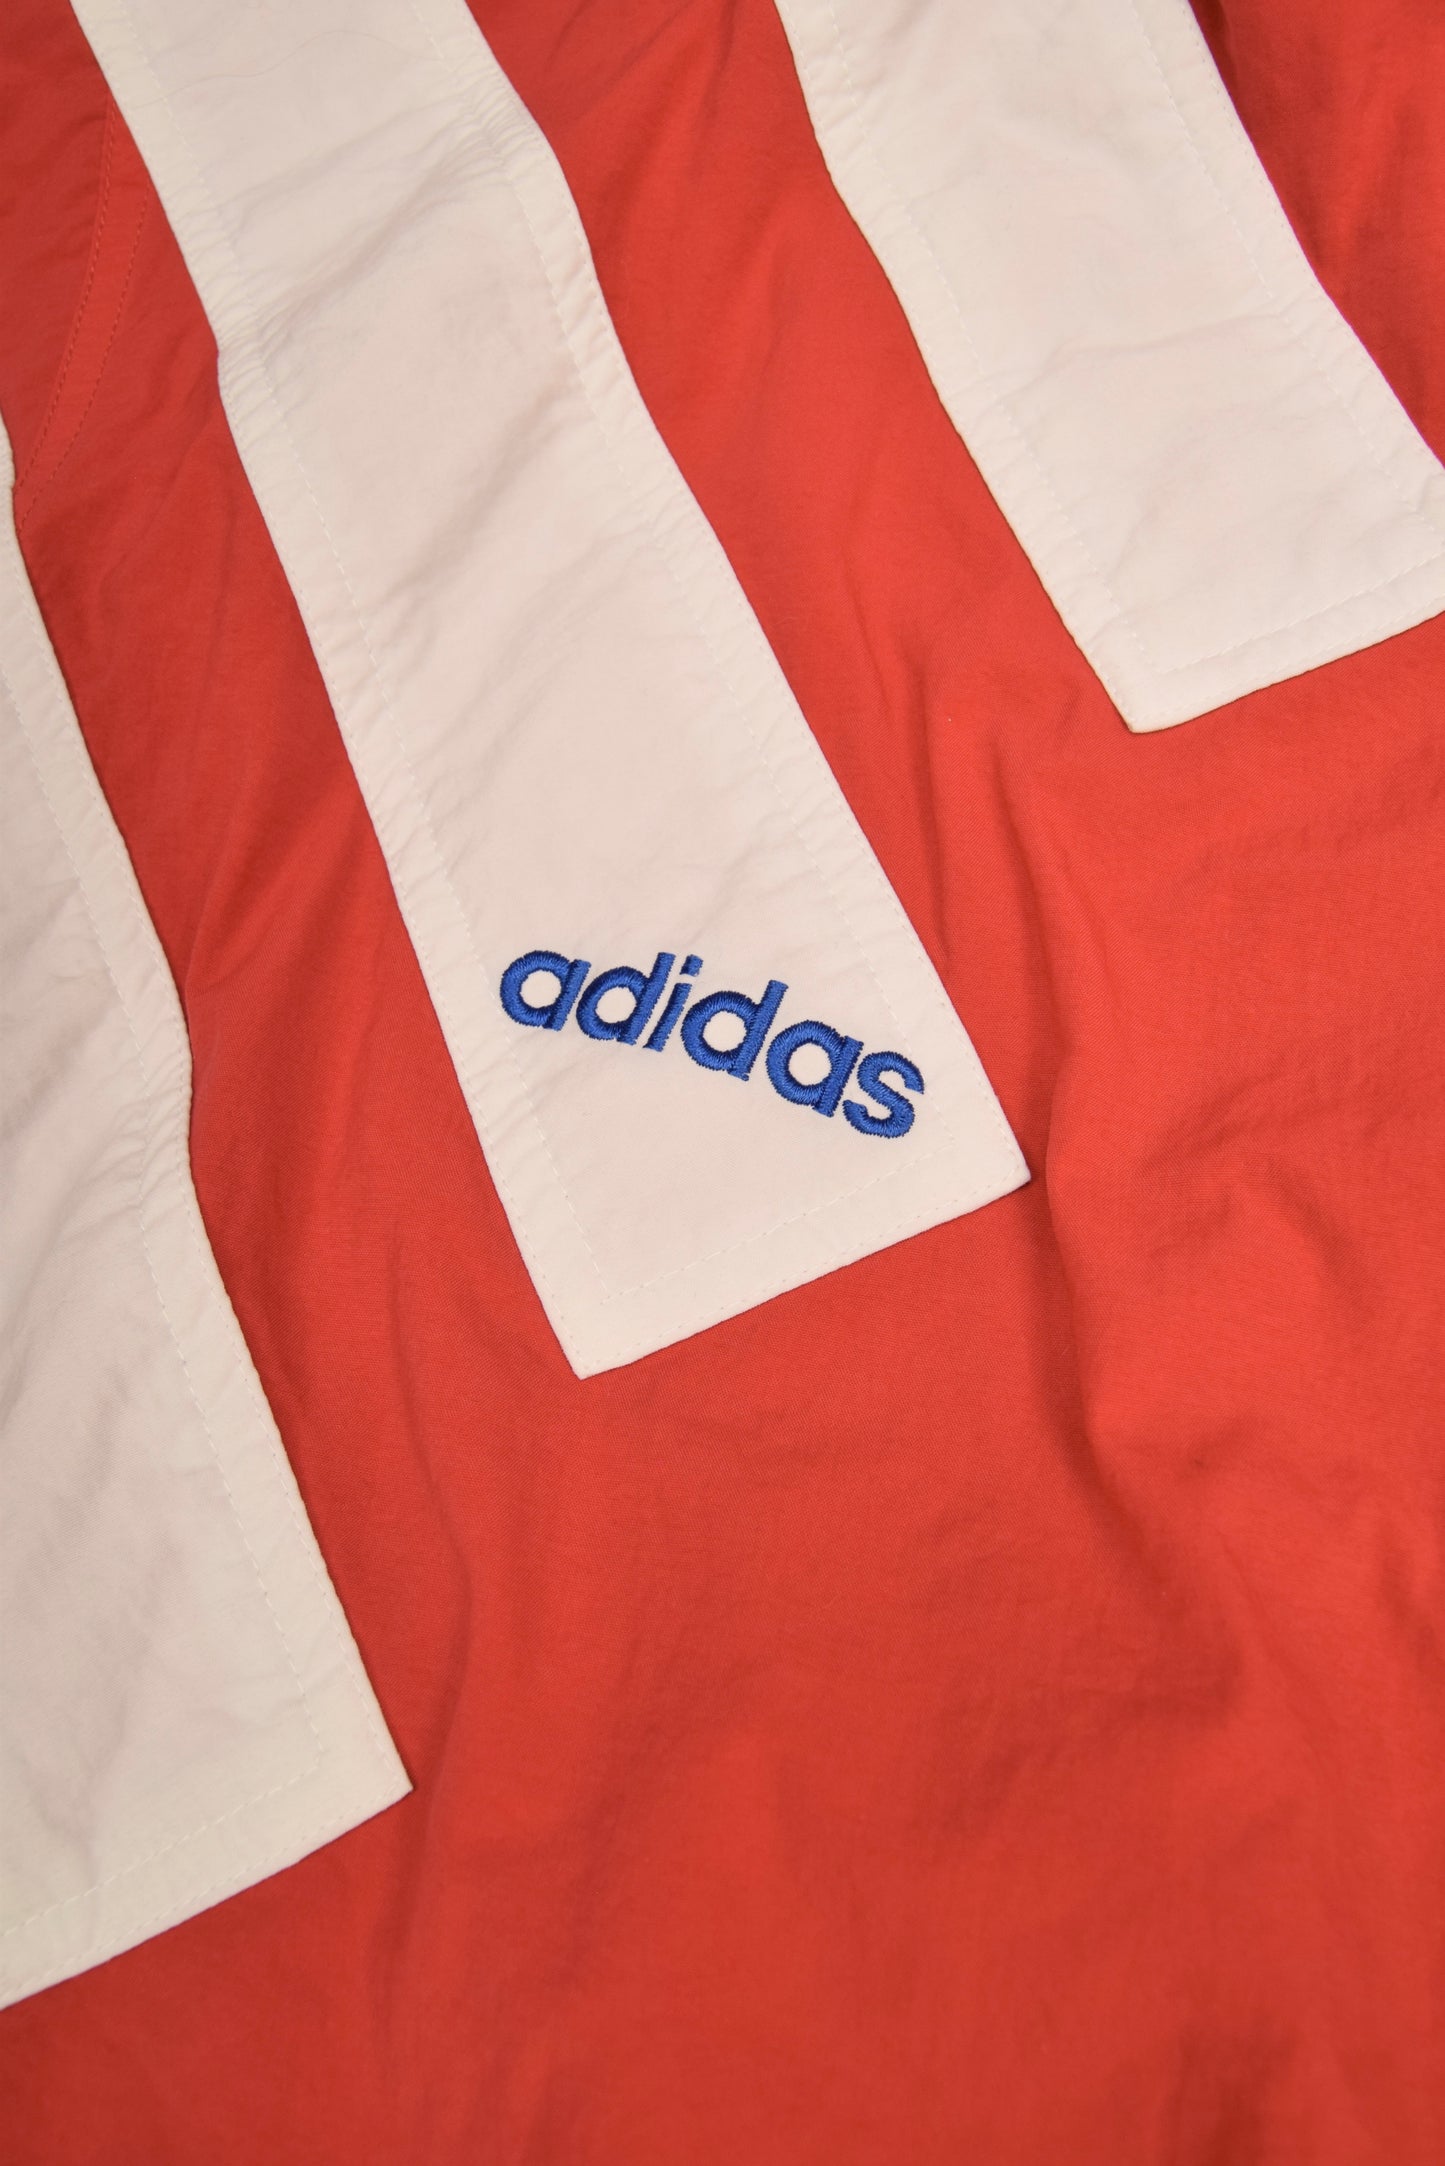 Vintage Bayern München Adidas 1993-1995 Jacket / Shell Size L Red Blue White